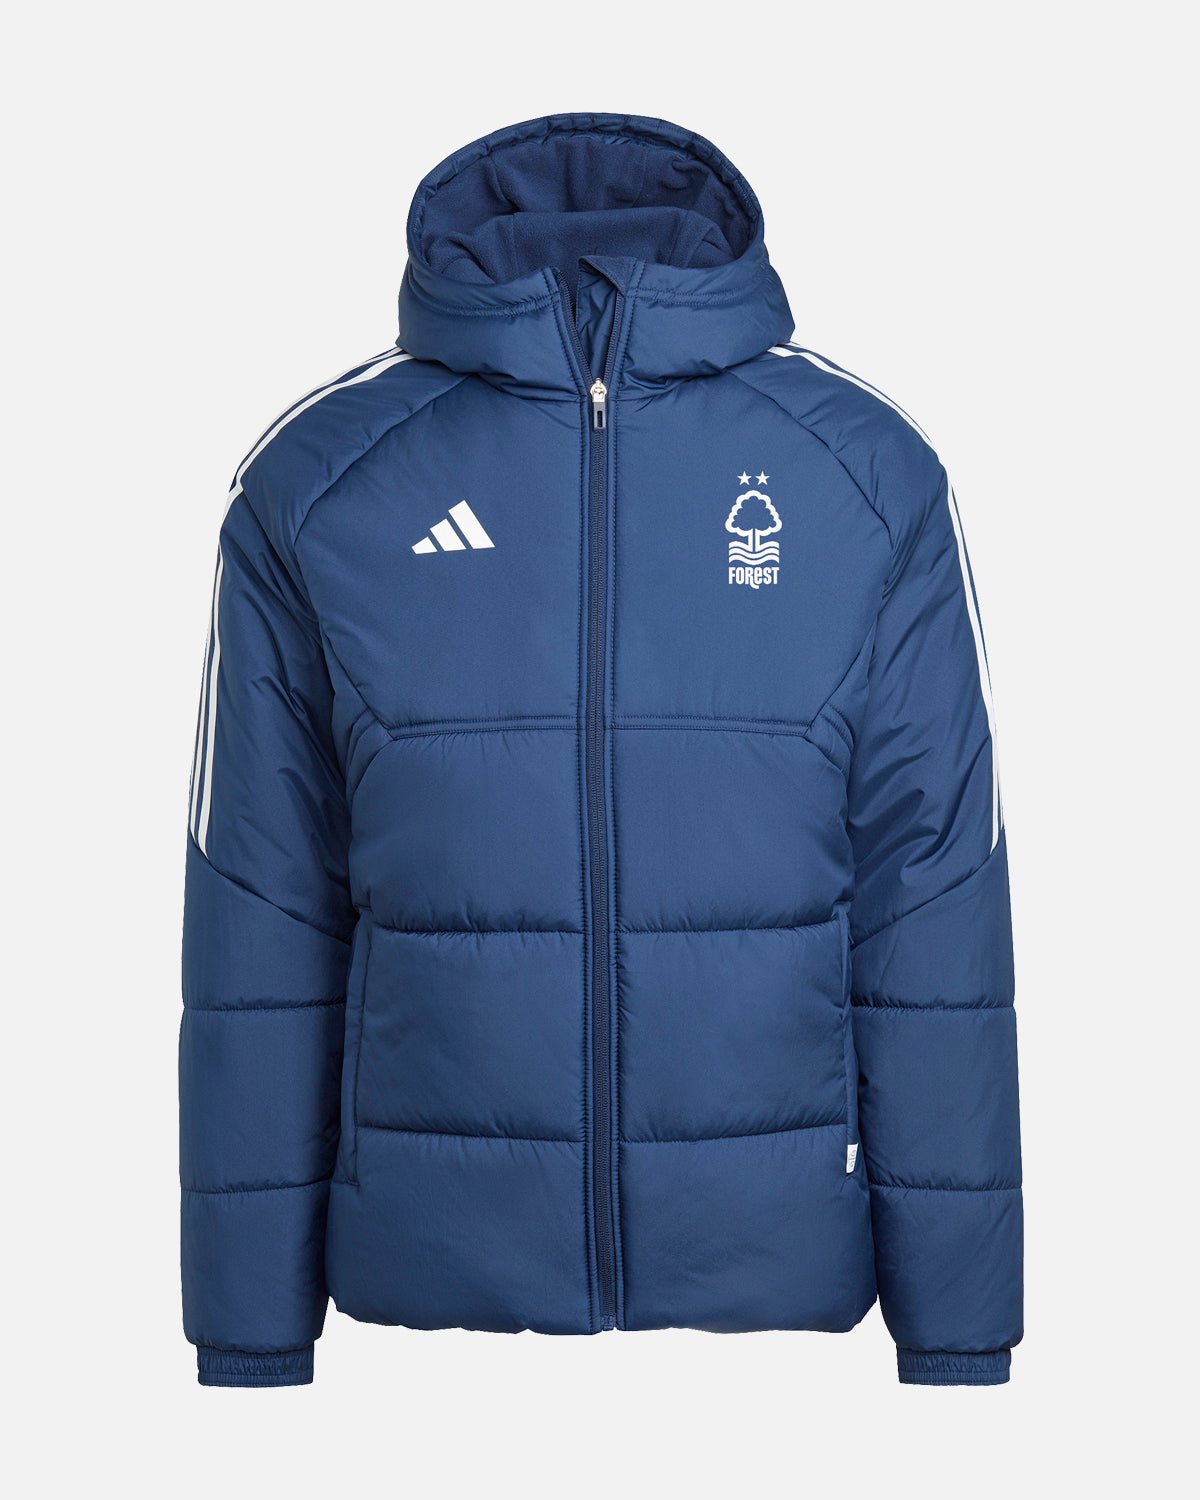 NFFC Junior Navy Winter Jacket 23-24 - Nottingham Forest FC